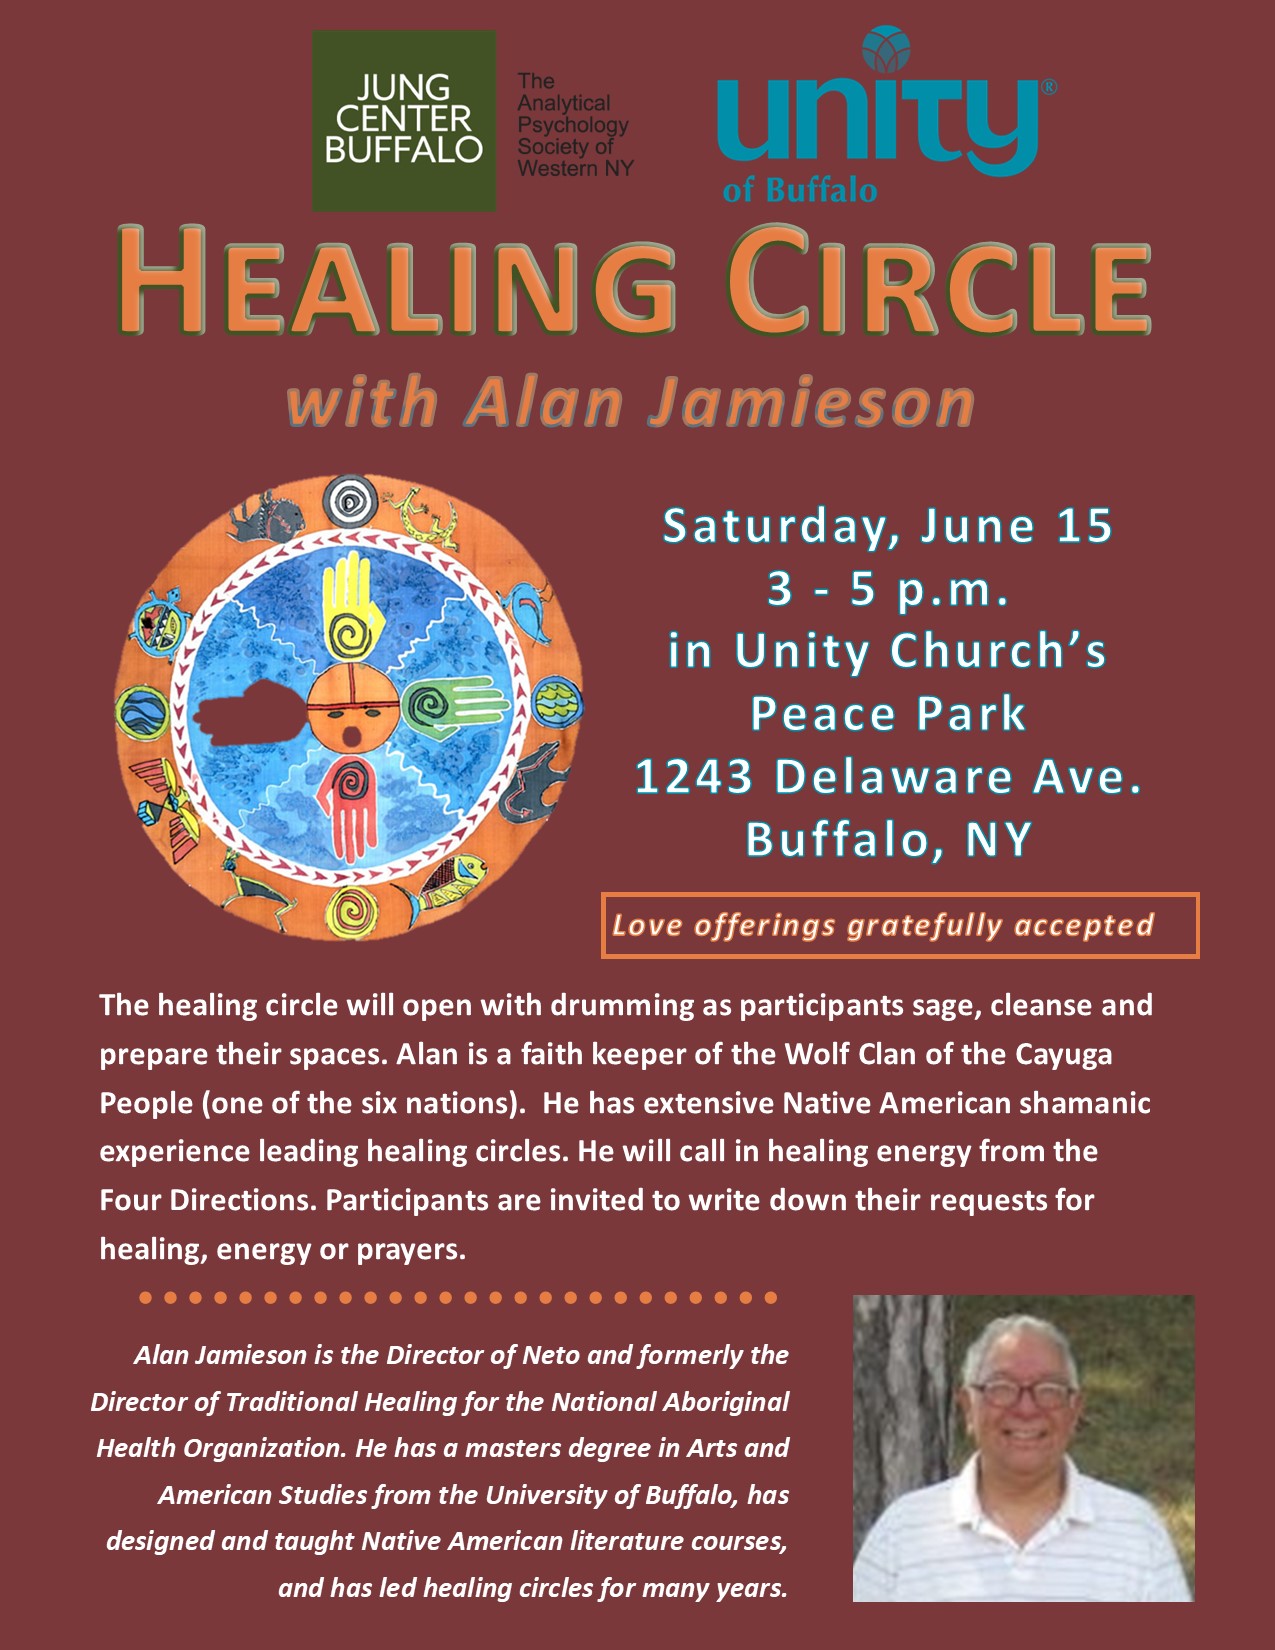 Healing Circle with Alan Jamieson Image